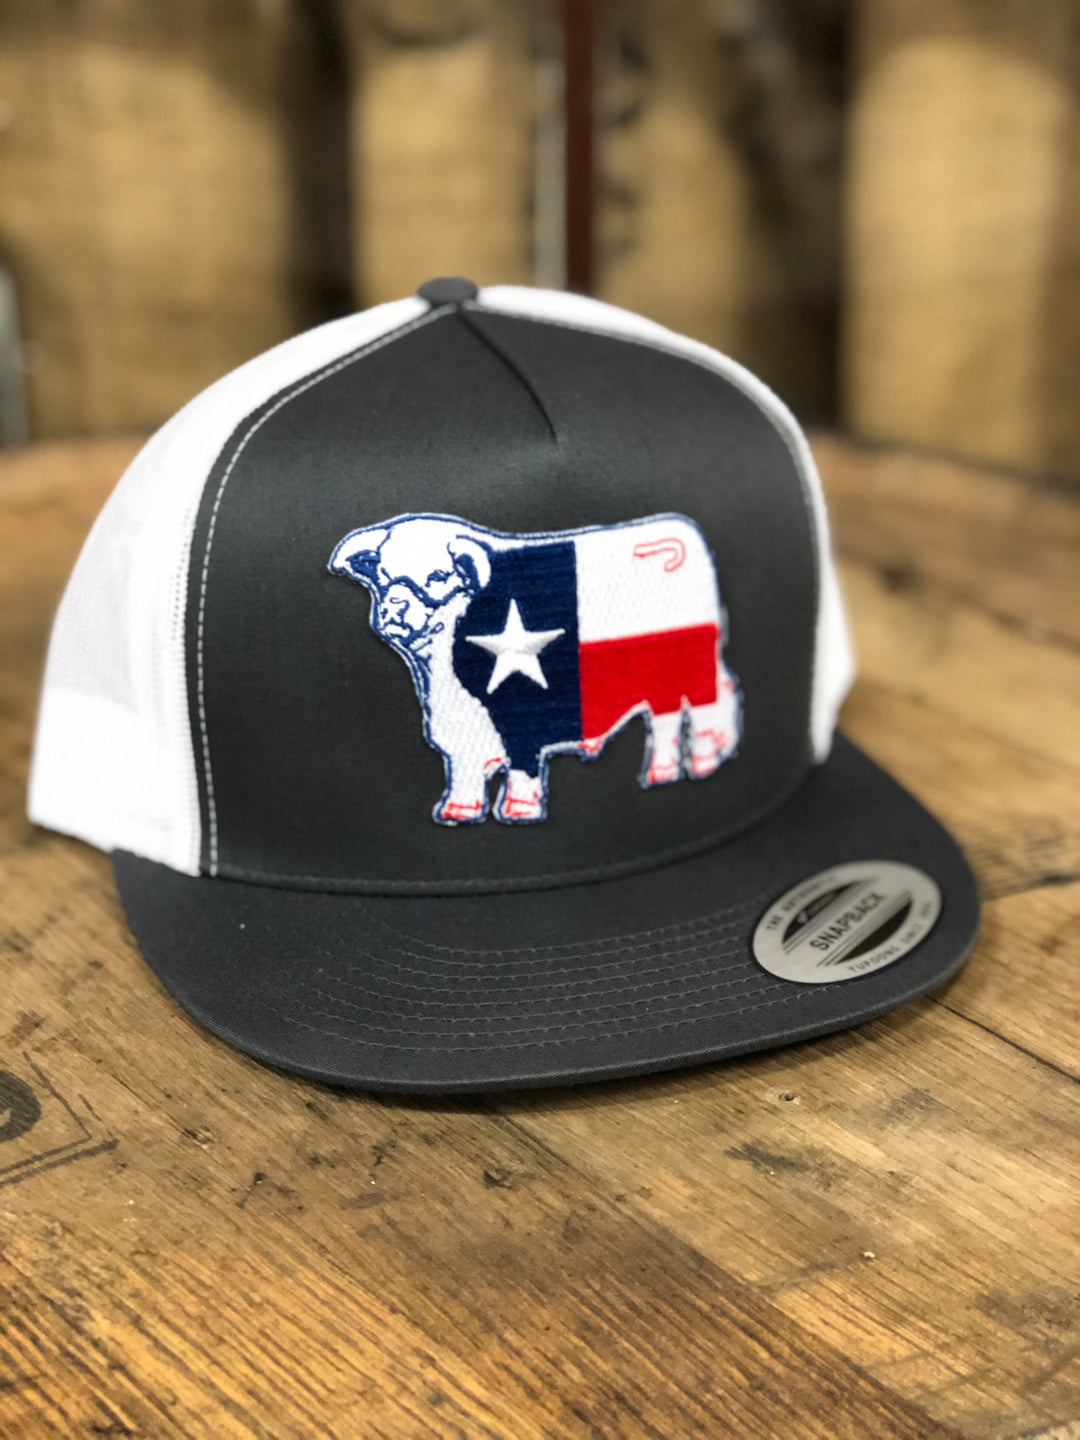 Lazy J Ranch Wear Grey & White 4" Texas Flag Bull Cap